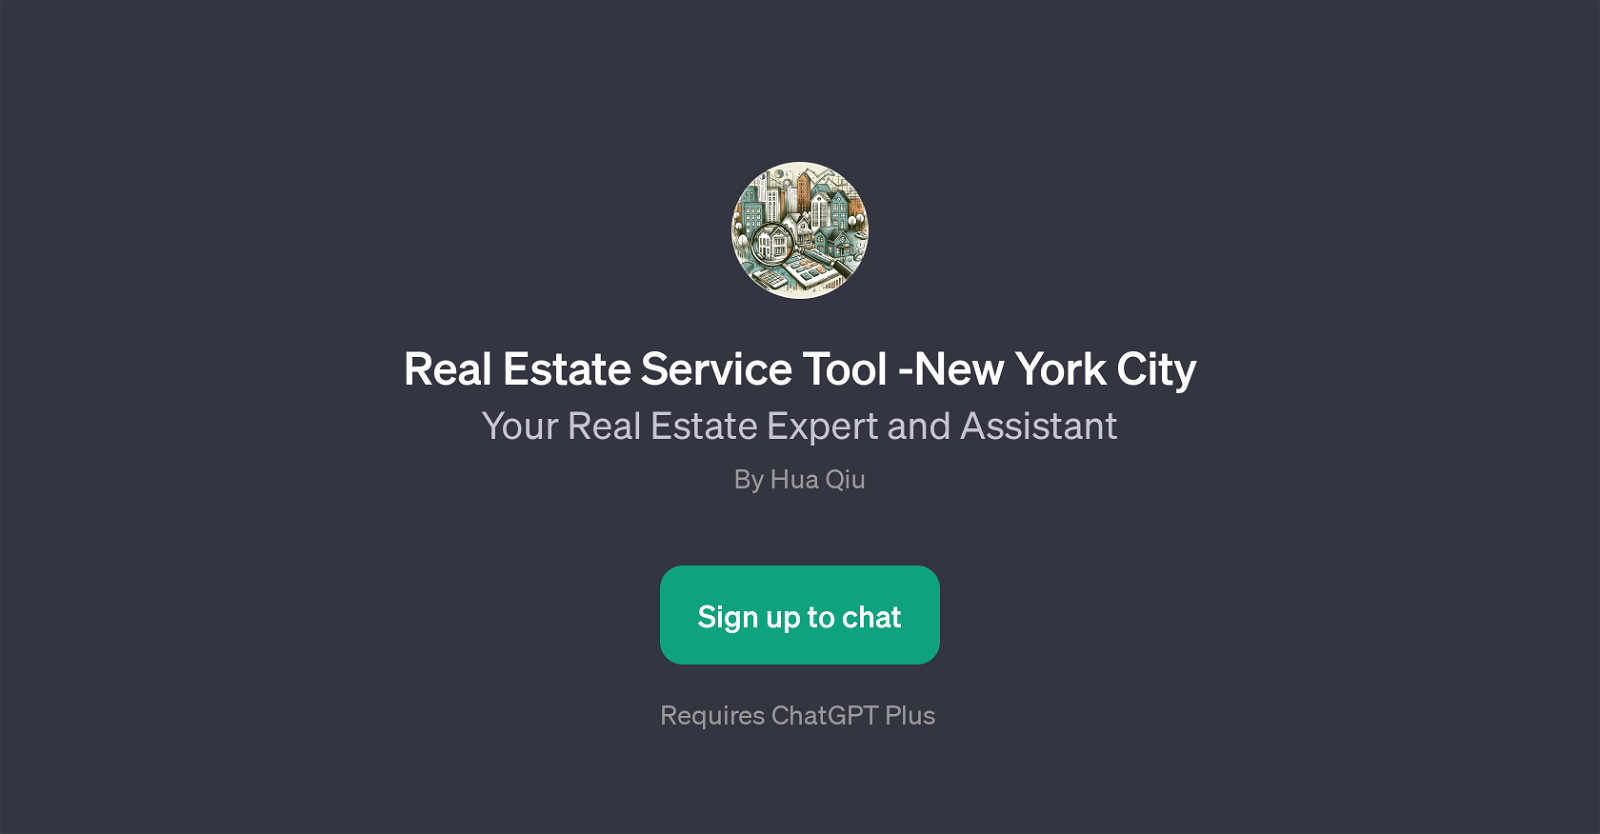 Real Estate Service Tool -New York City website